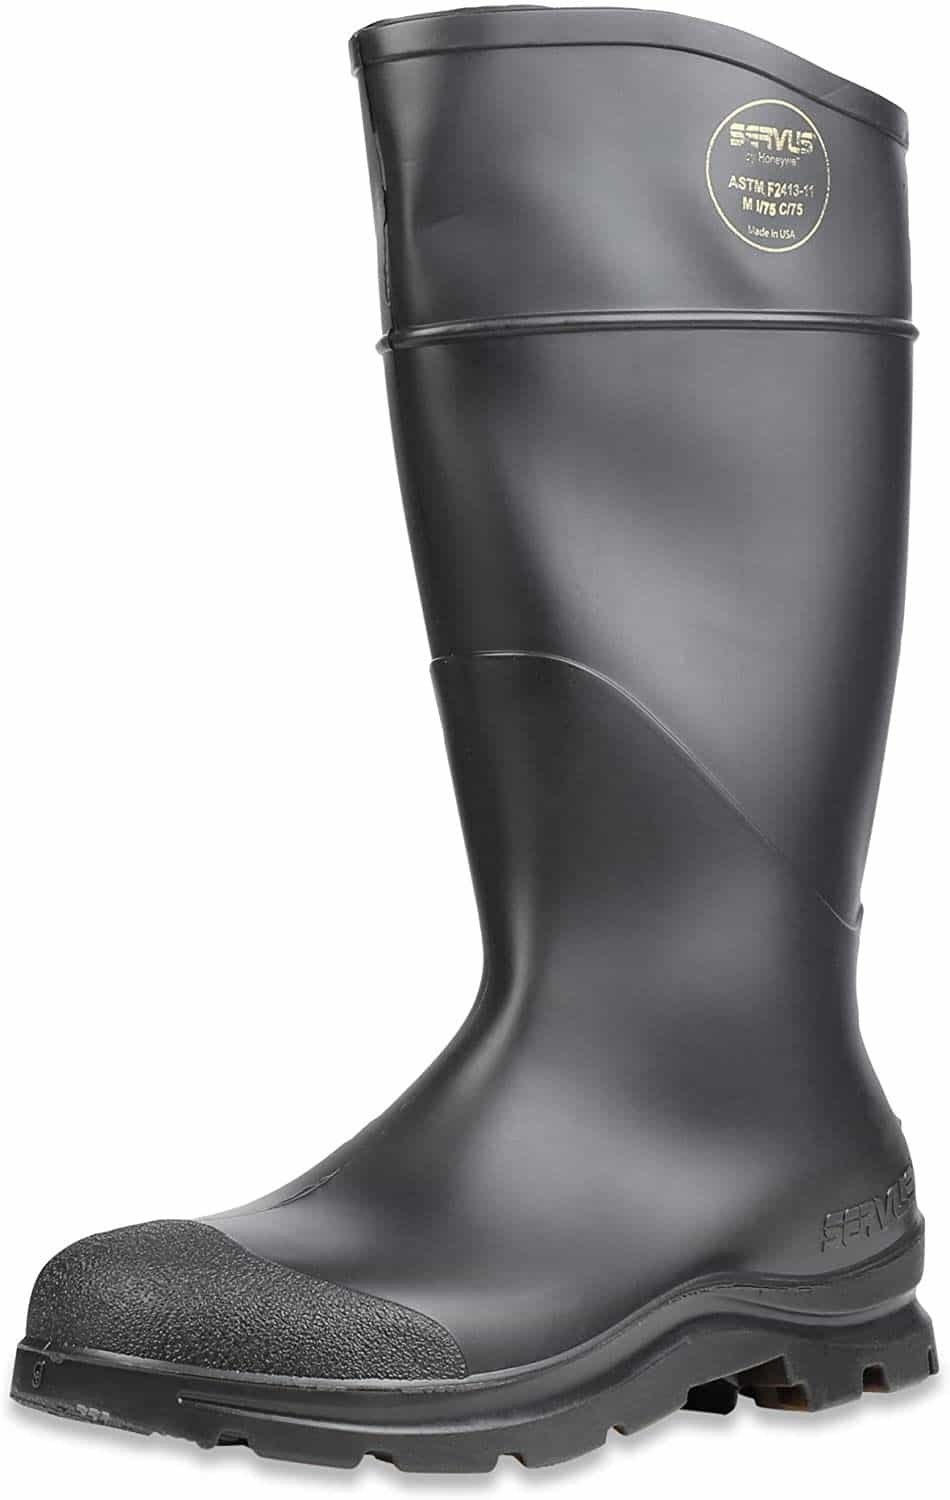 Servus Comfort Technology PVC Steel Toe Men's Work Boots